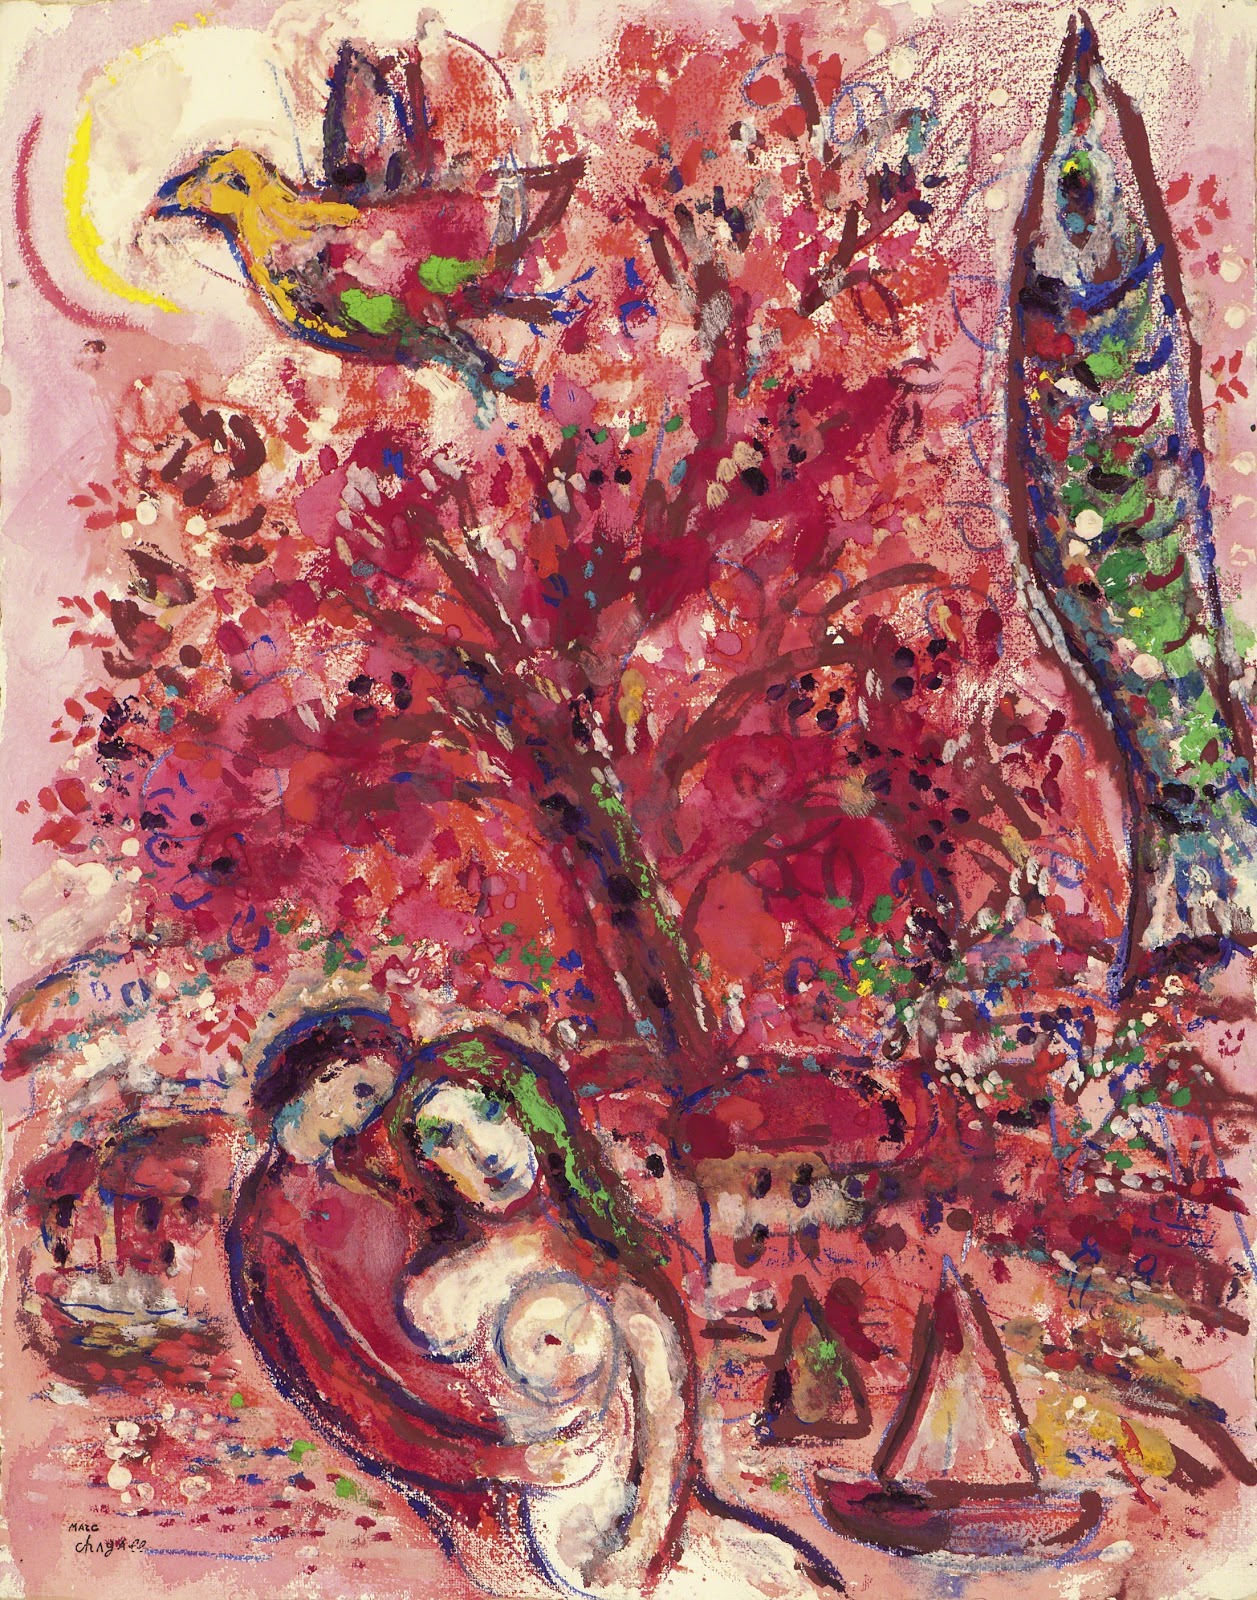 Marc+Chagall-1887-1985 (401).jpg